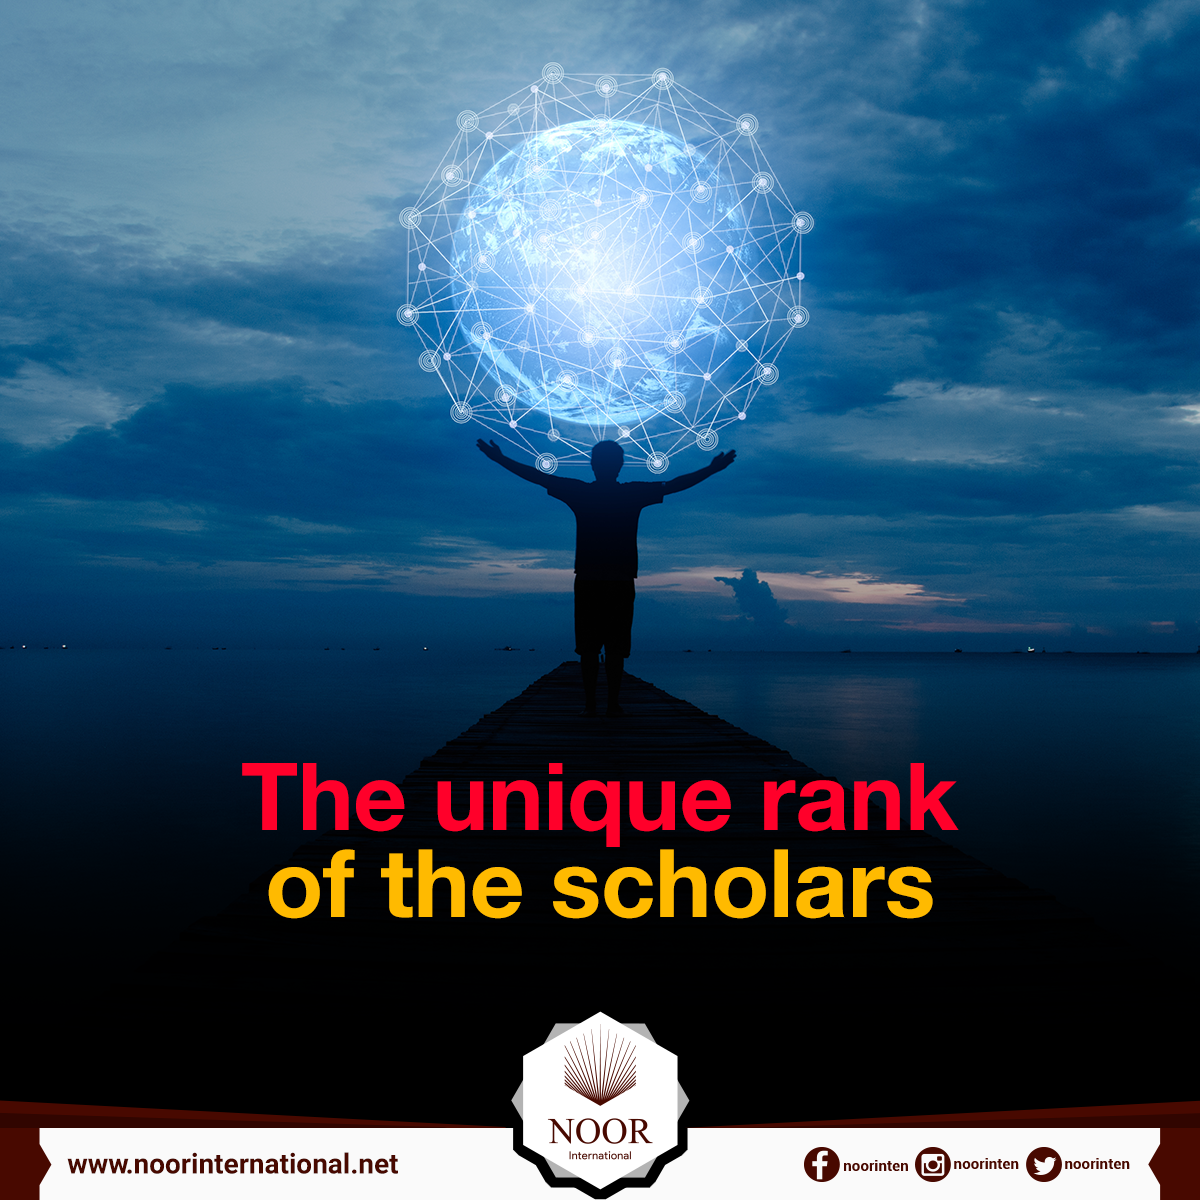 The unique rank of the scholars